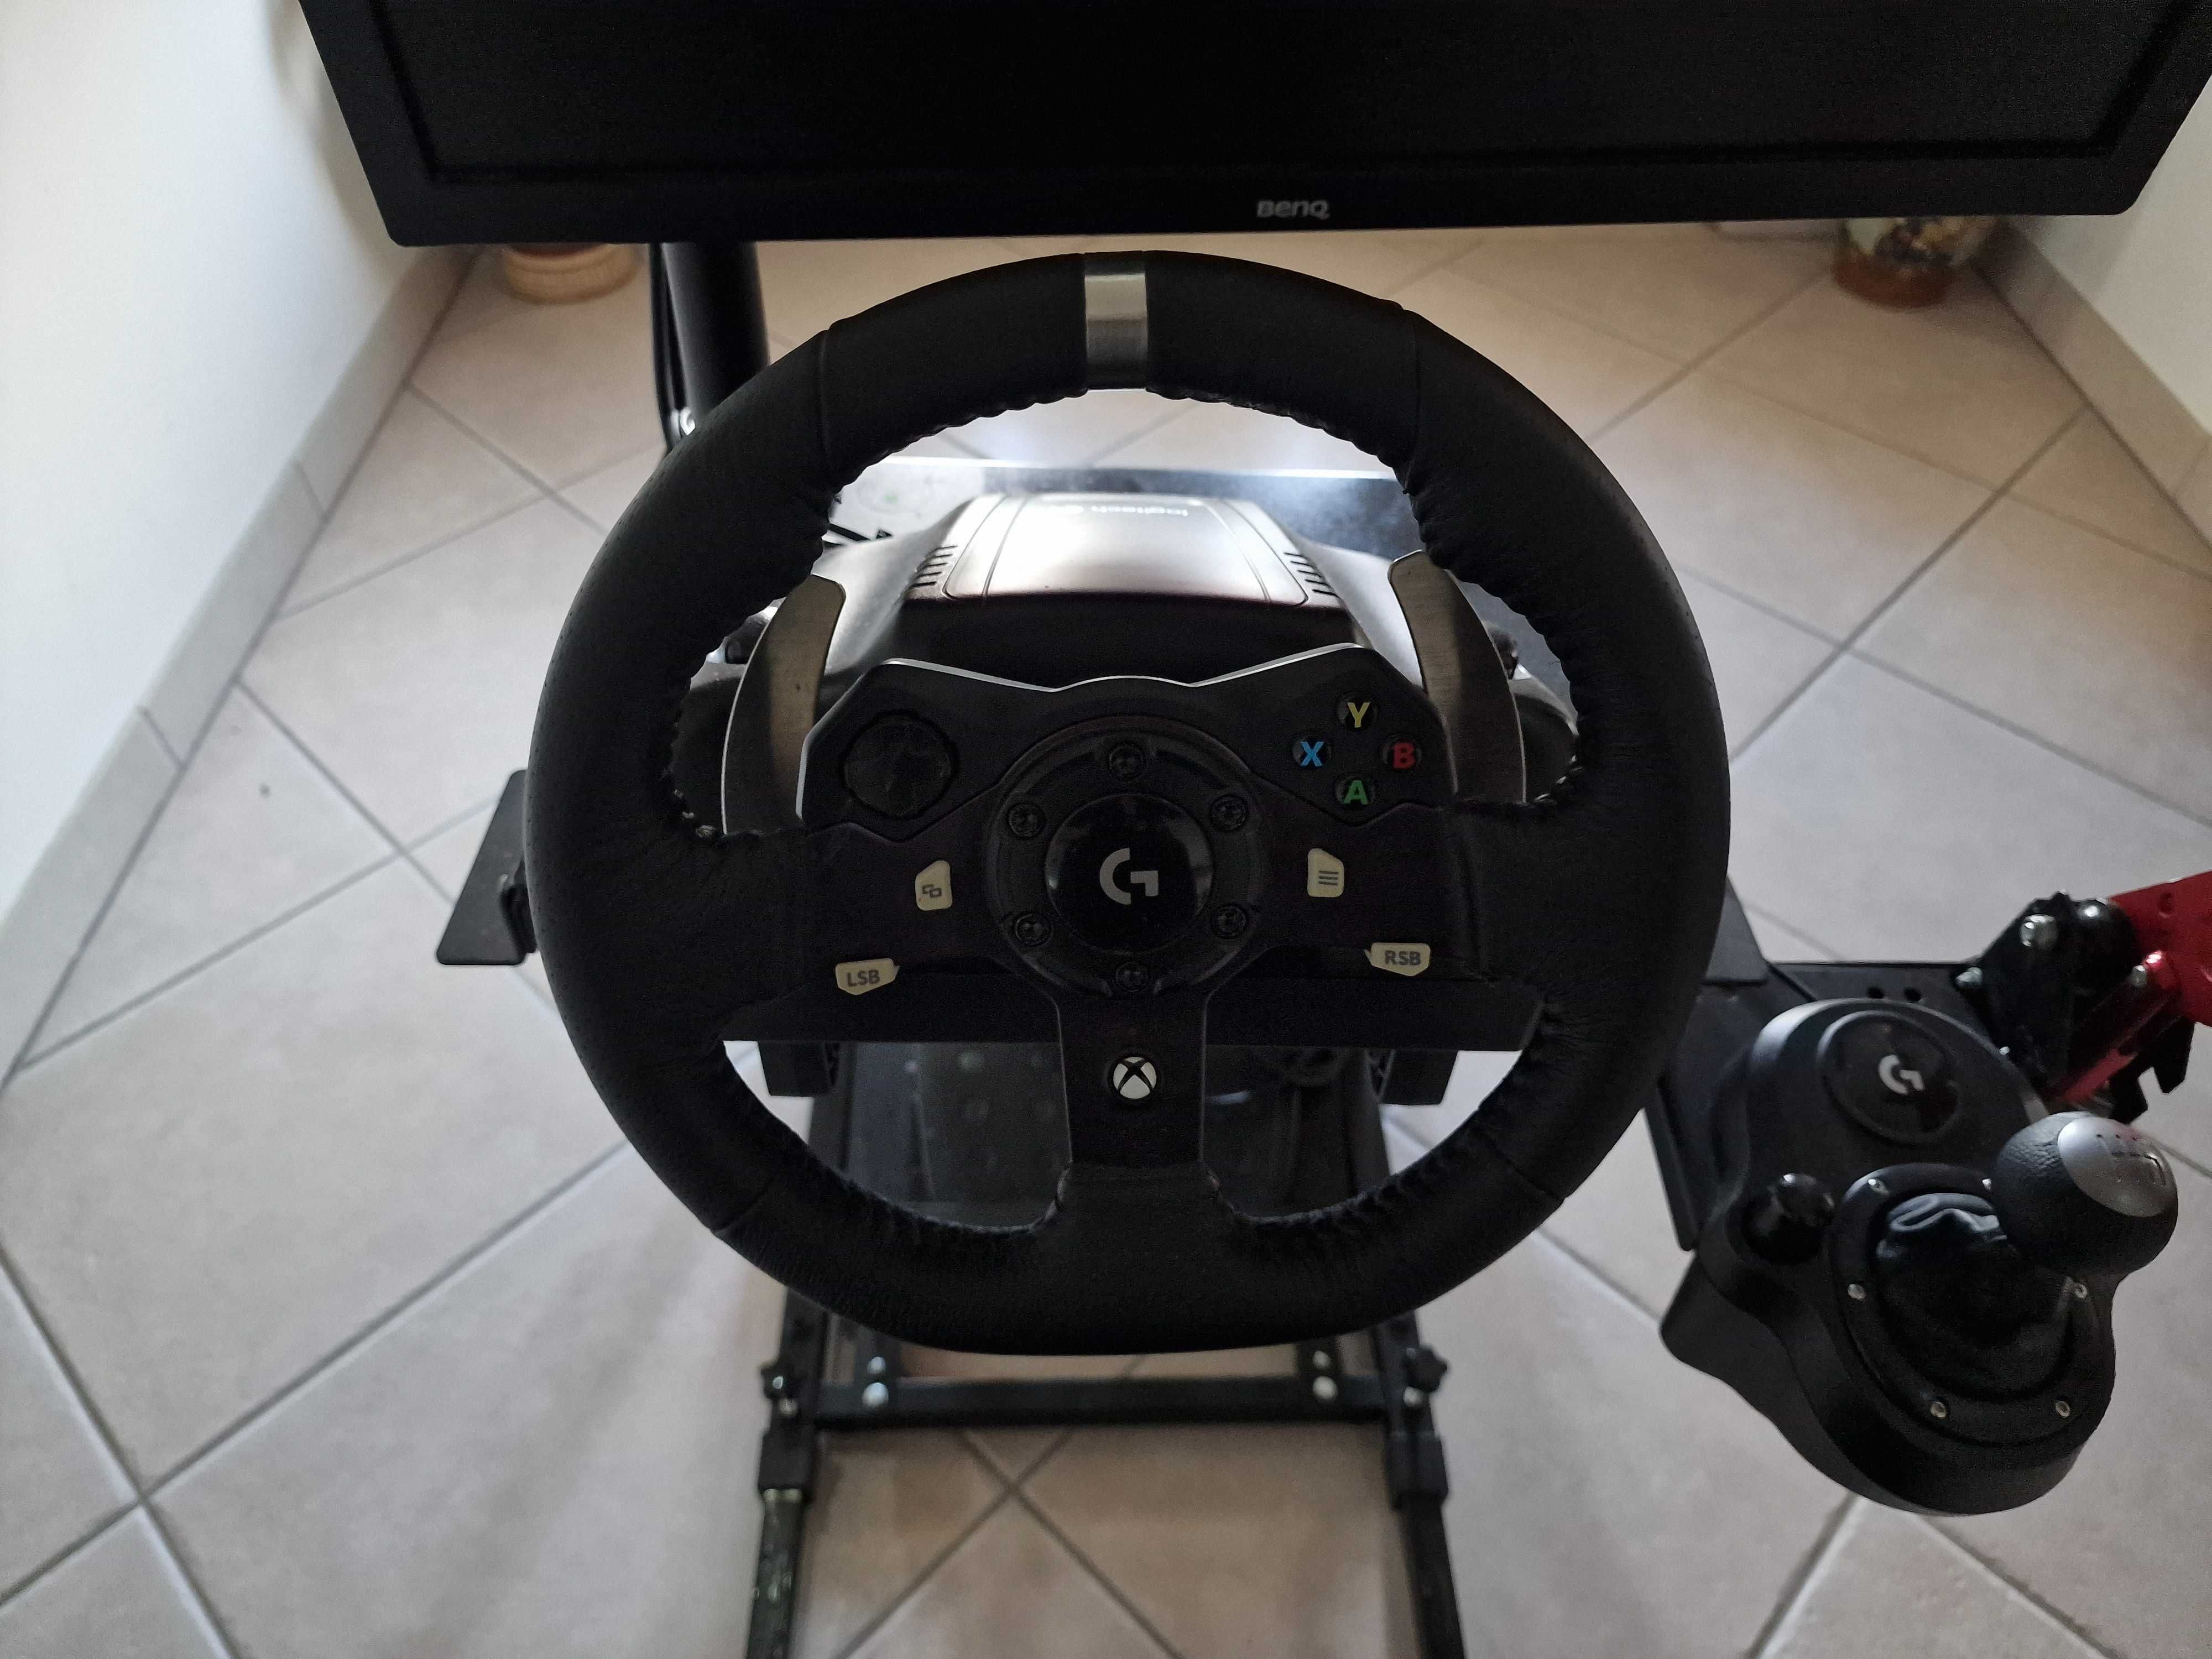 COMPLETO Simulador Racing/Drift Cockpit PC/XBOX